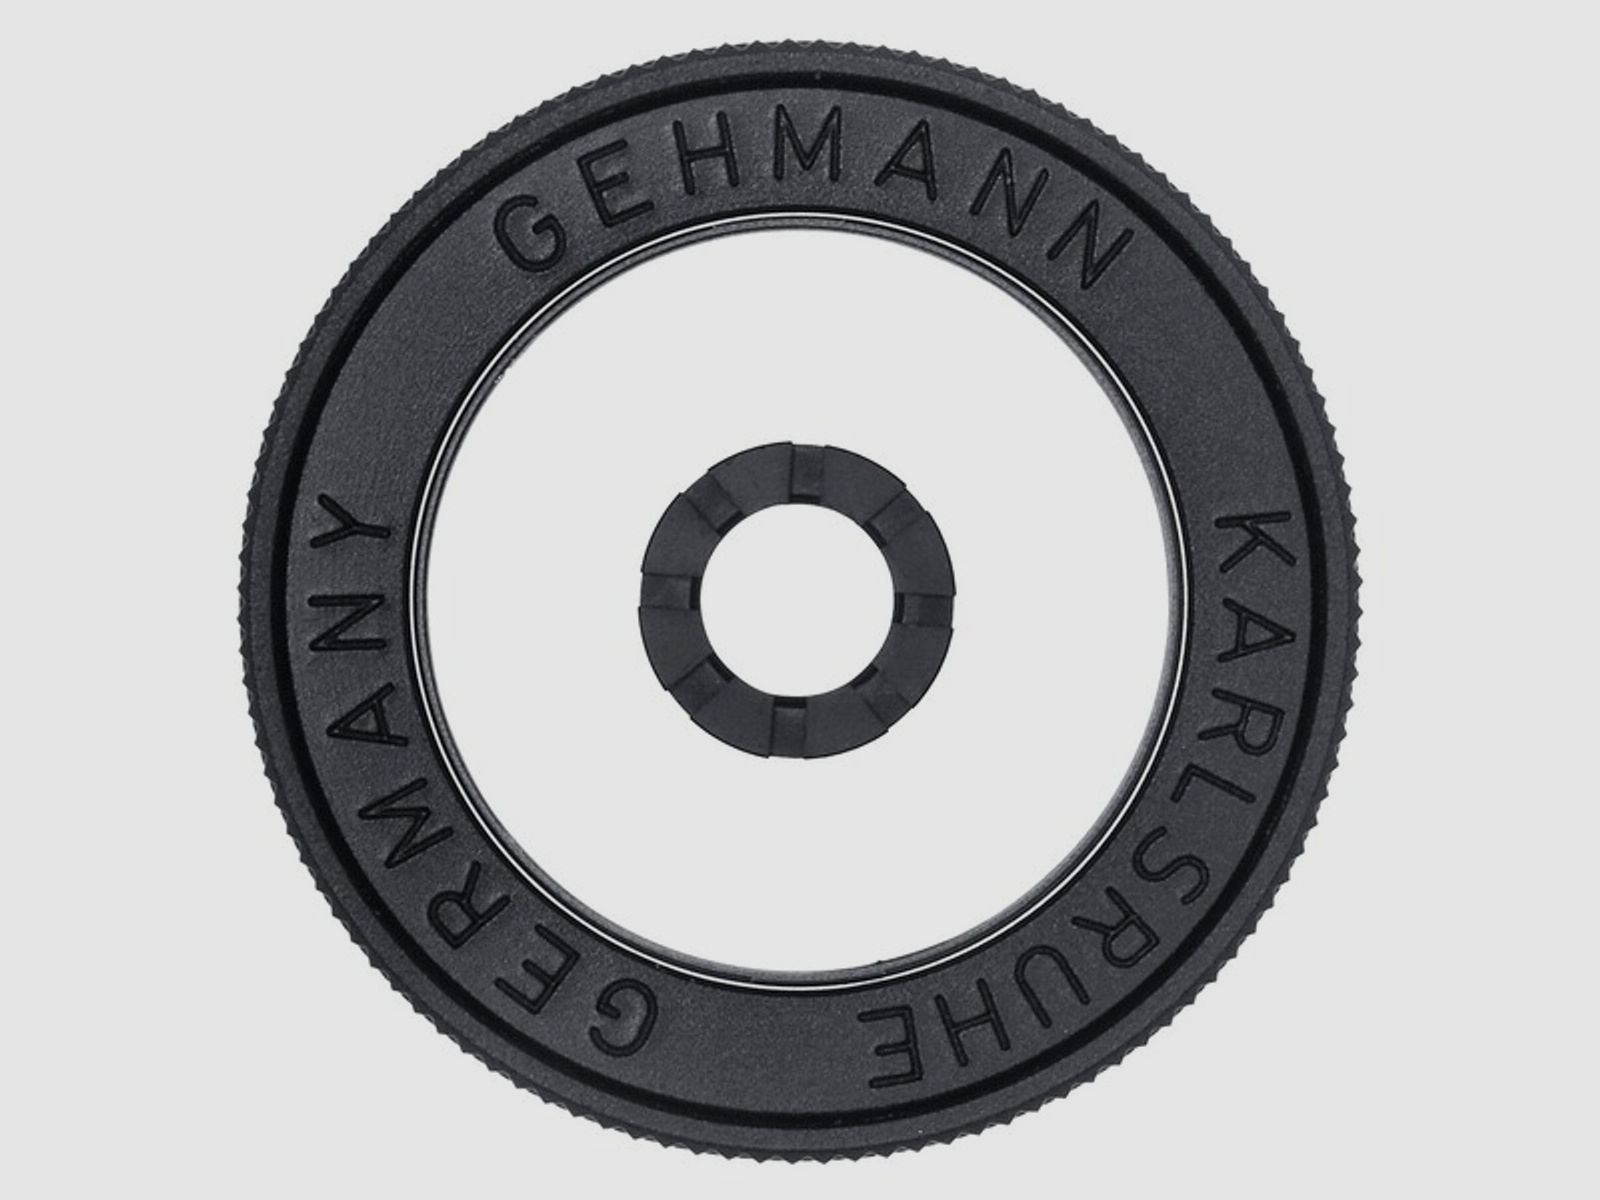 Iris-Ringkorn Gehmann M18 4,0-6,0 freistehend